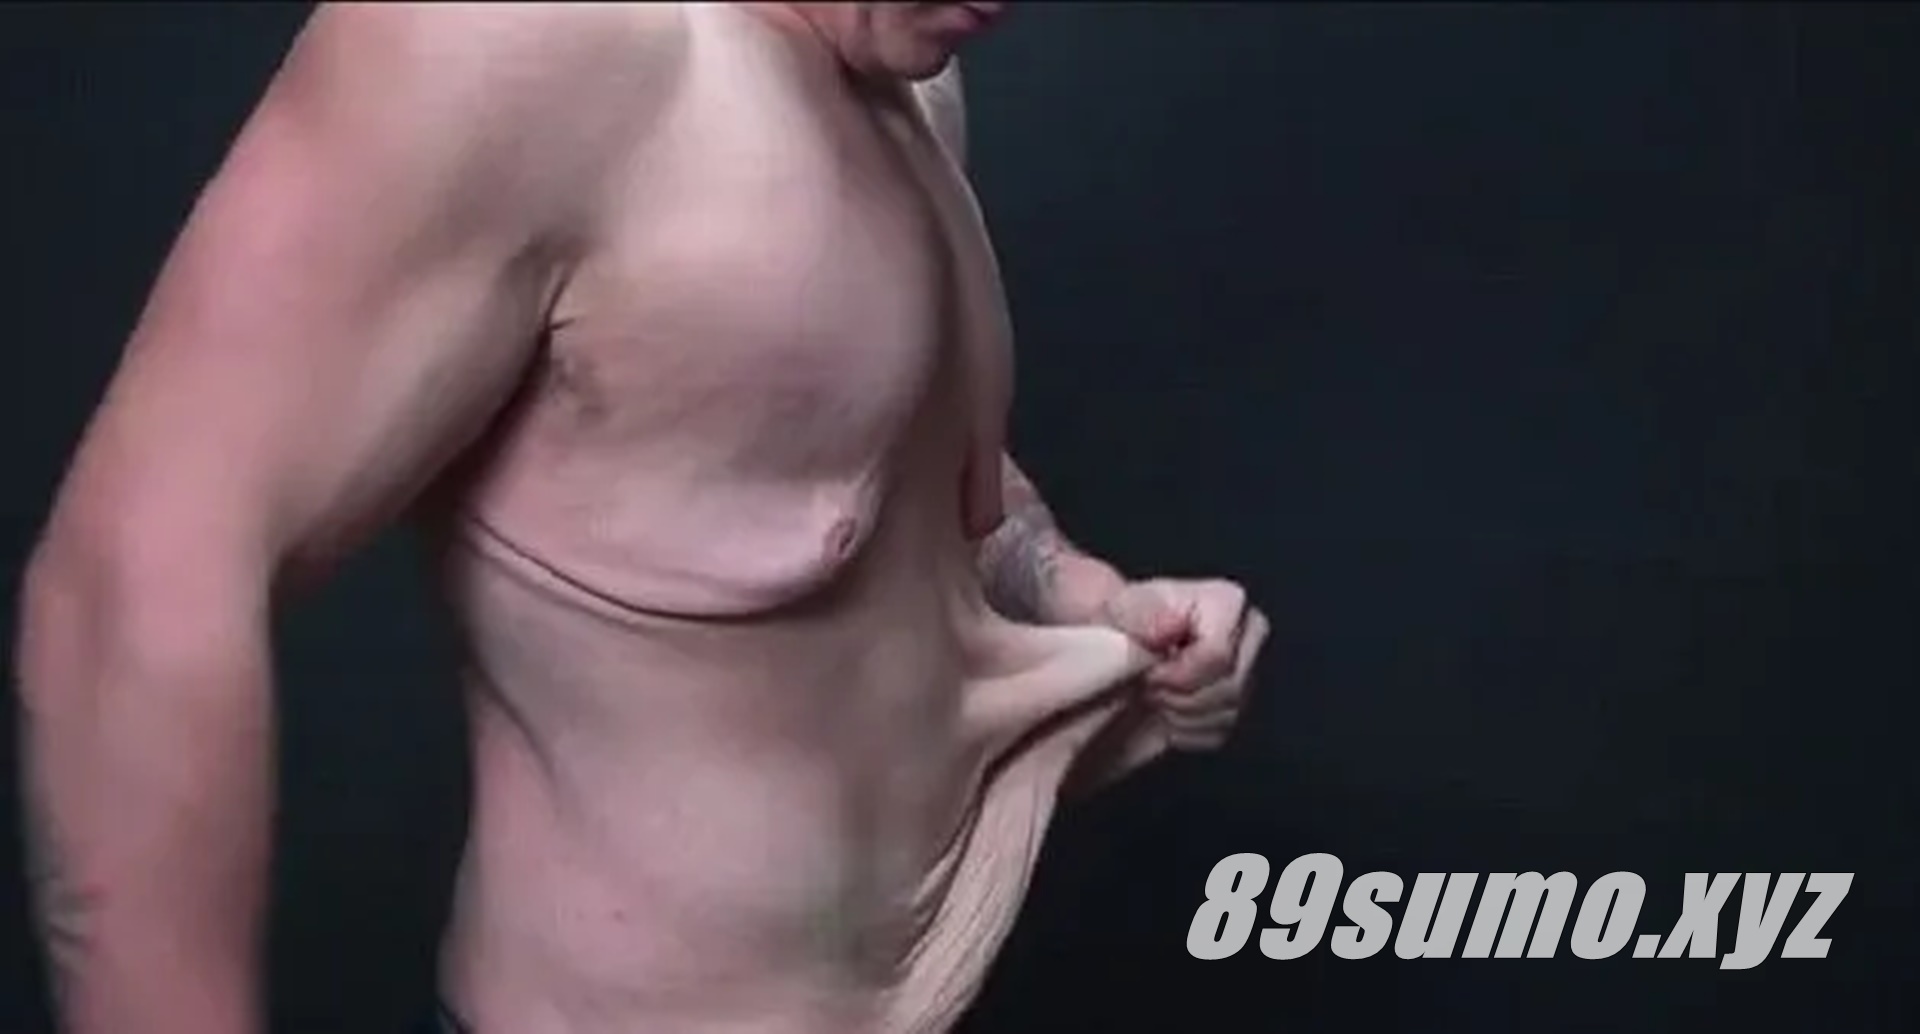 кожа у мужчин на груди фото 83